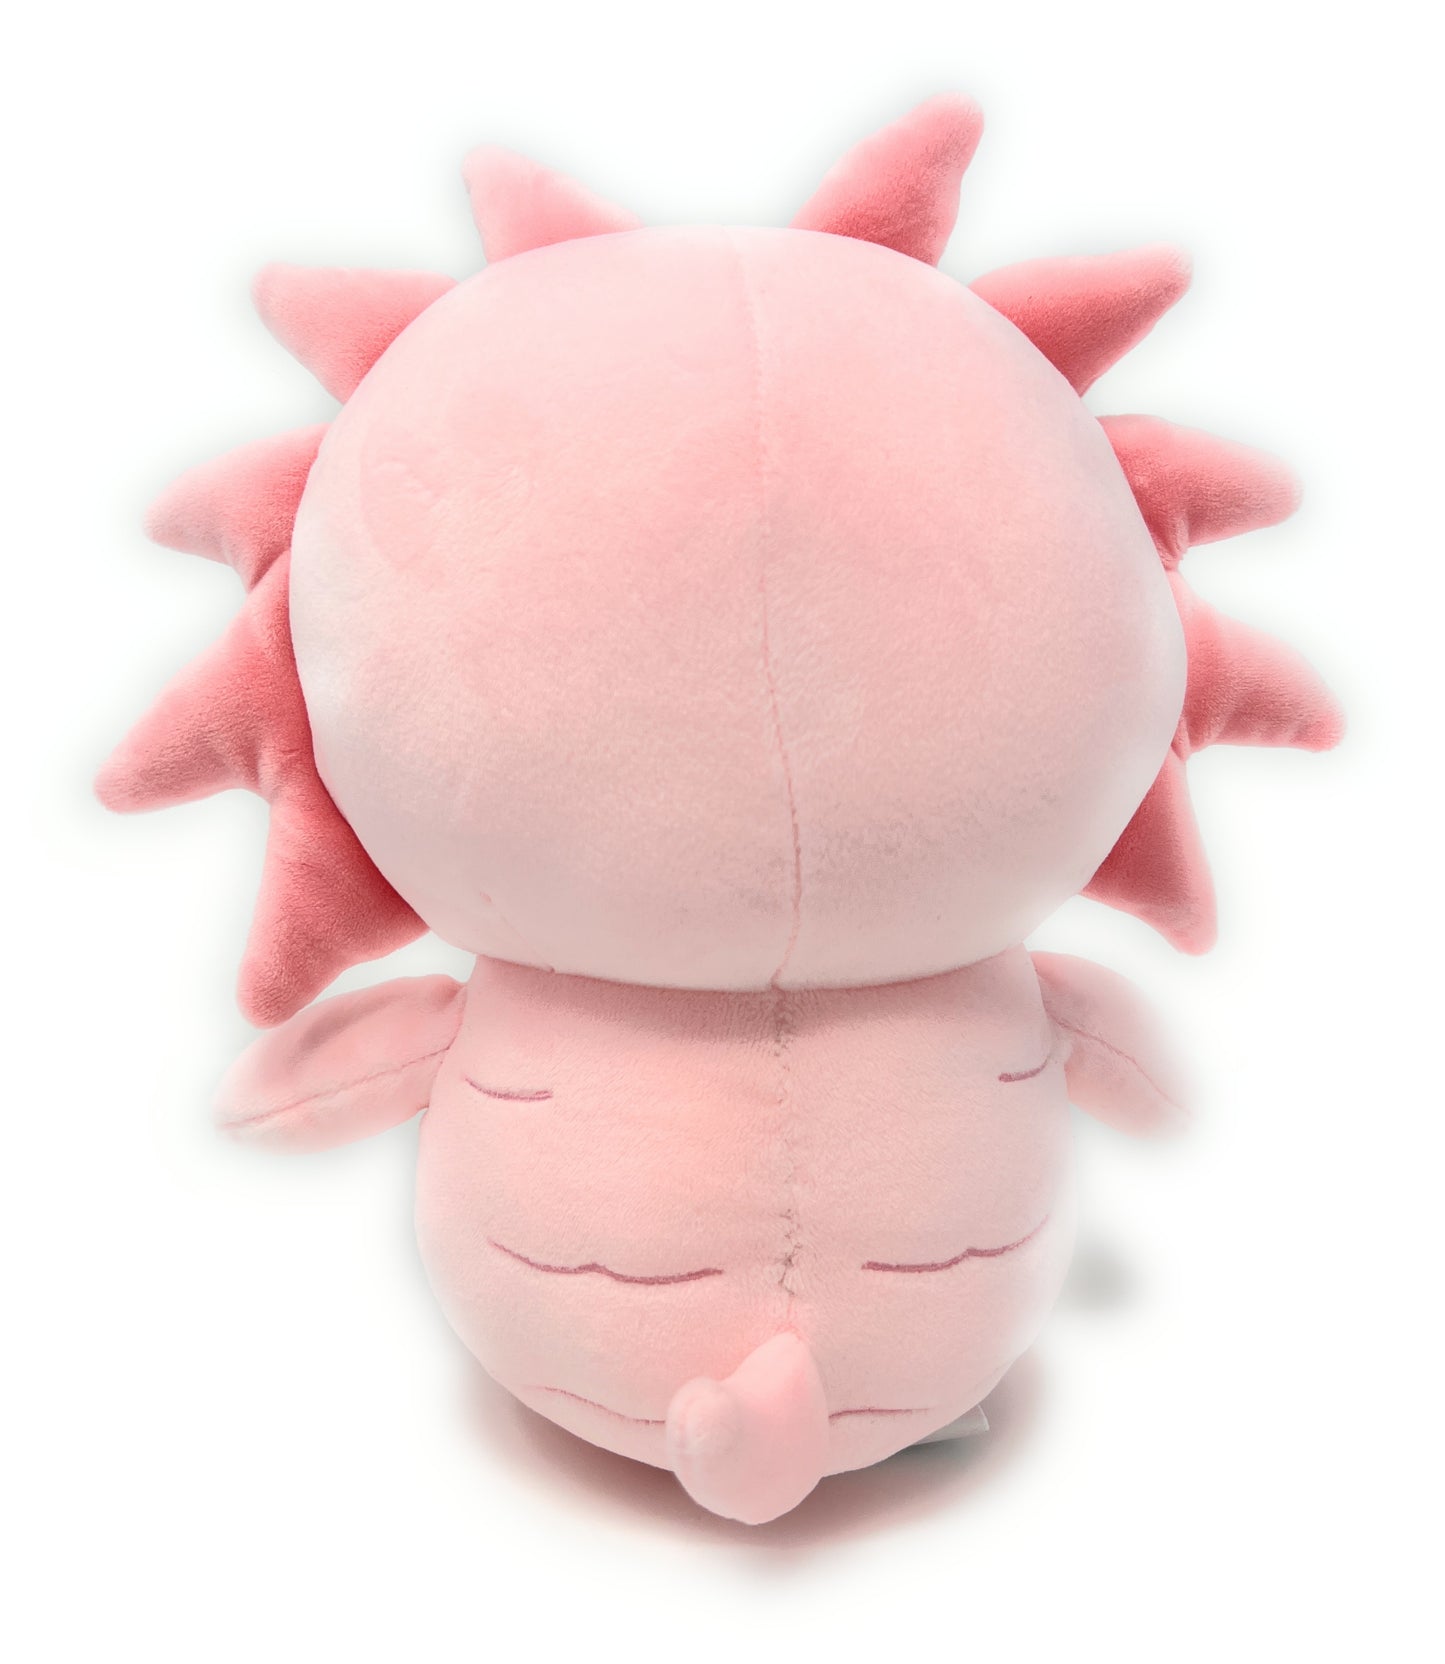 Make It Good 10-Inch Plush Toy: Whimsical Pink Axolotl Plush - Adorable Cuddle Companion